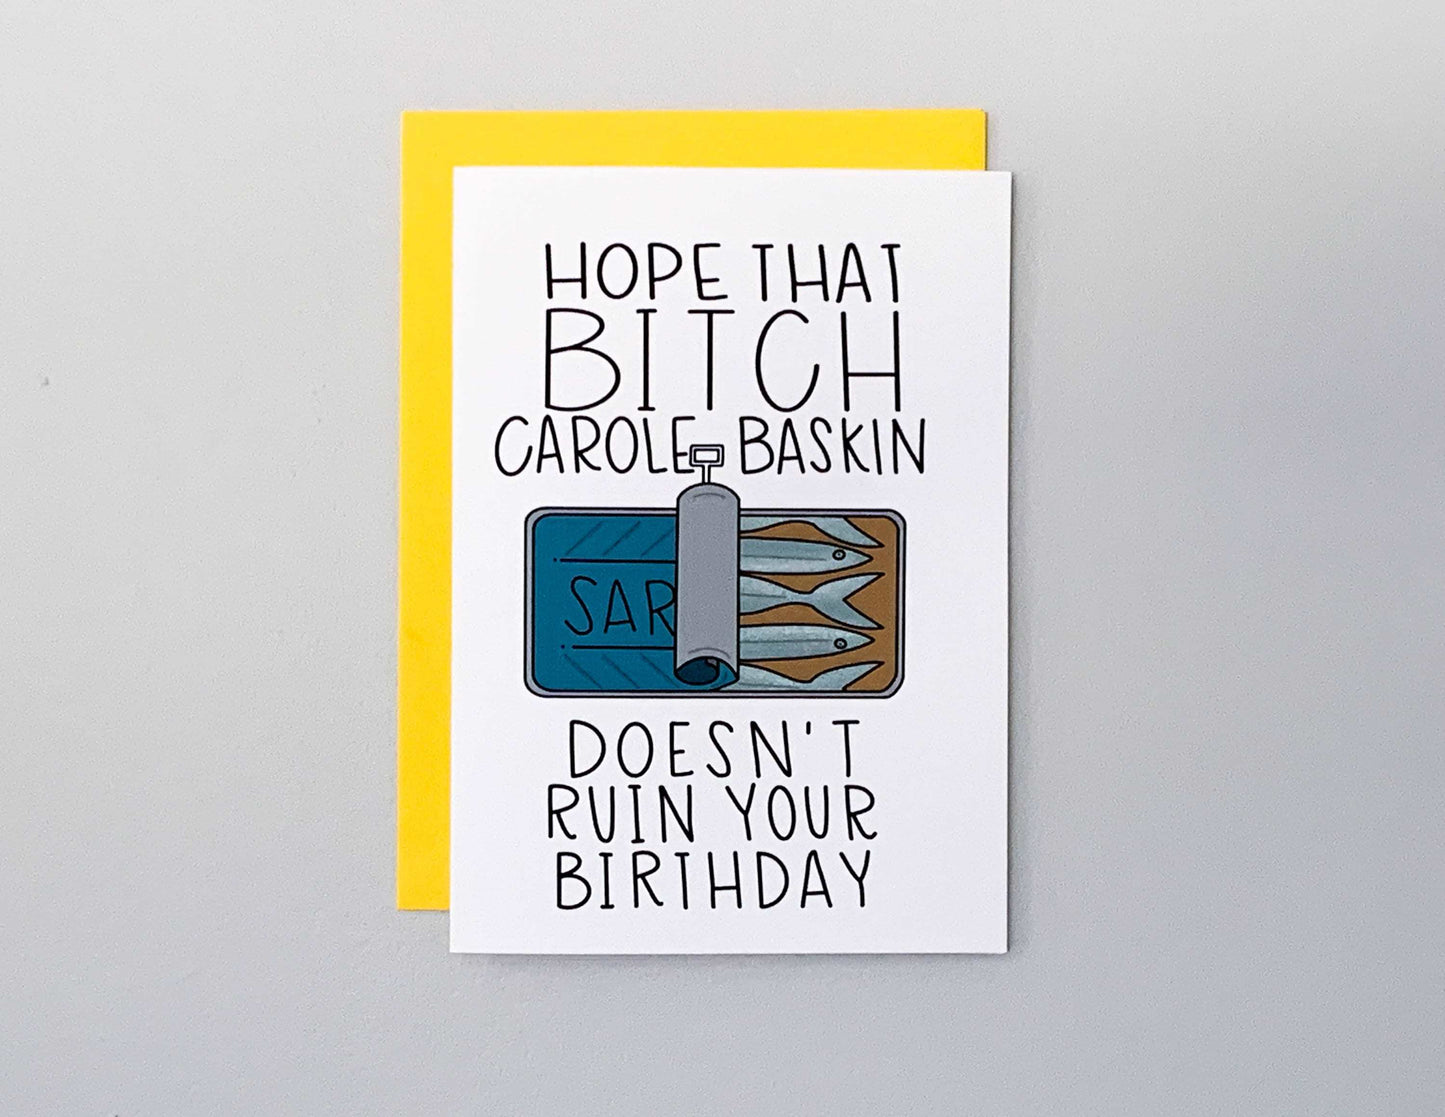 Carole Baskin Sardine Oil Tiger King Card by StoneDonut Design